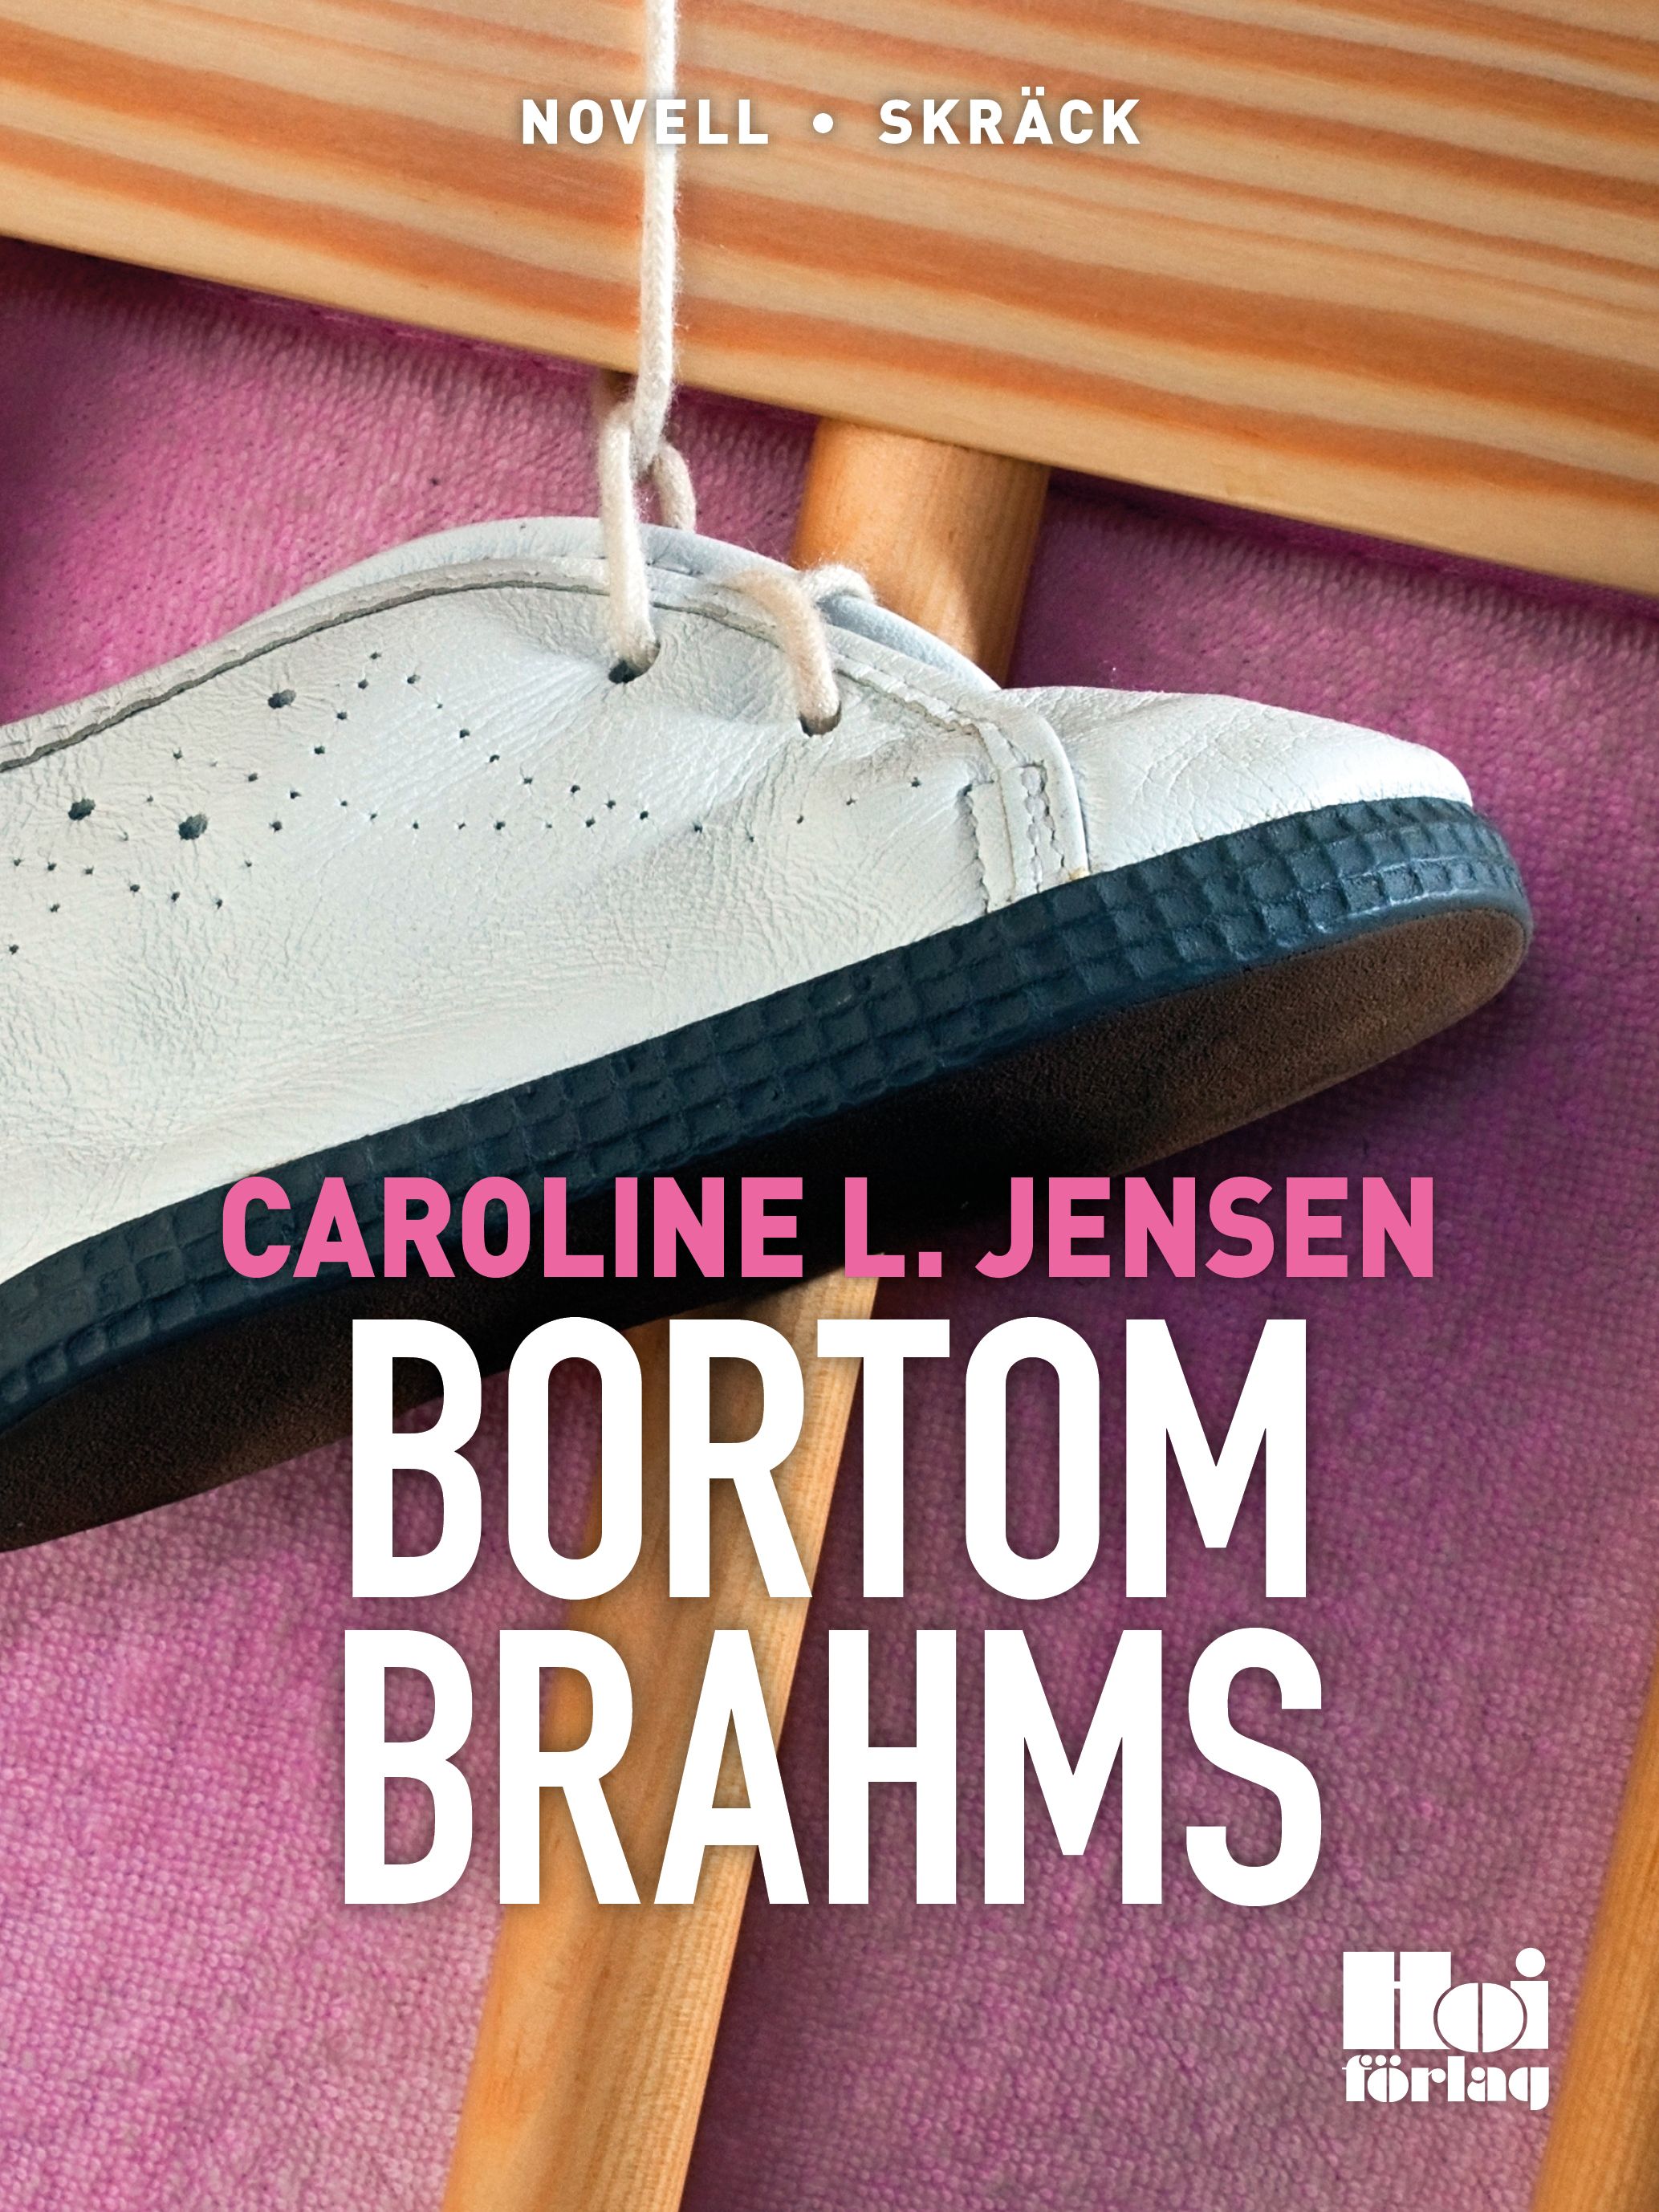 Bortom Brahms, eBook by Caroline L Jensen